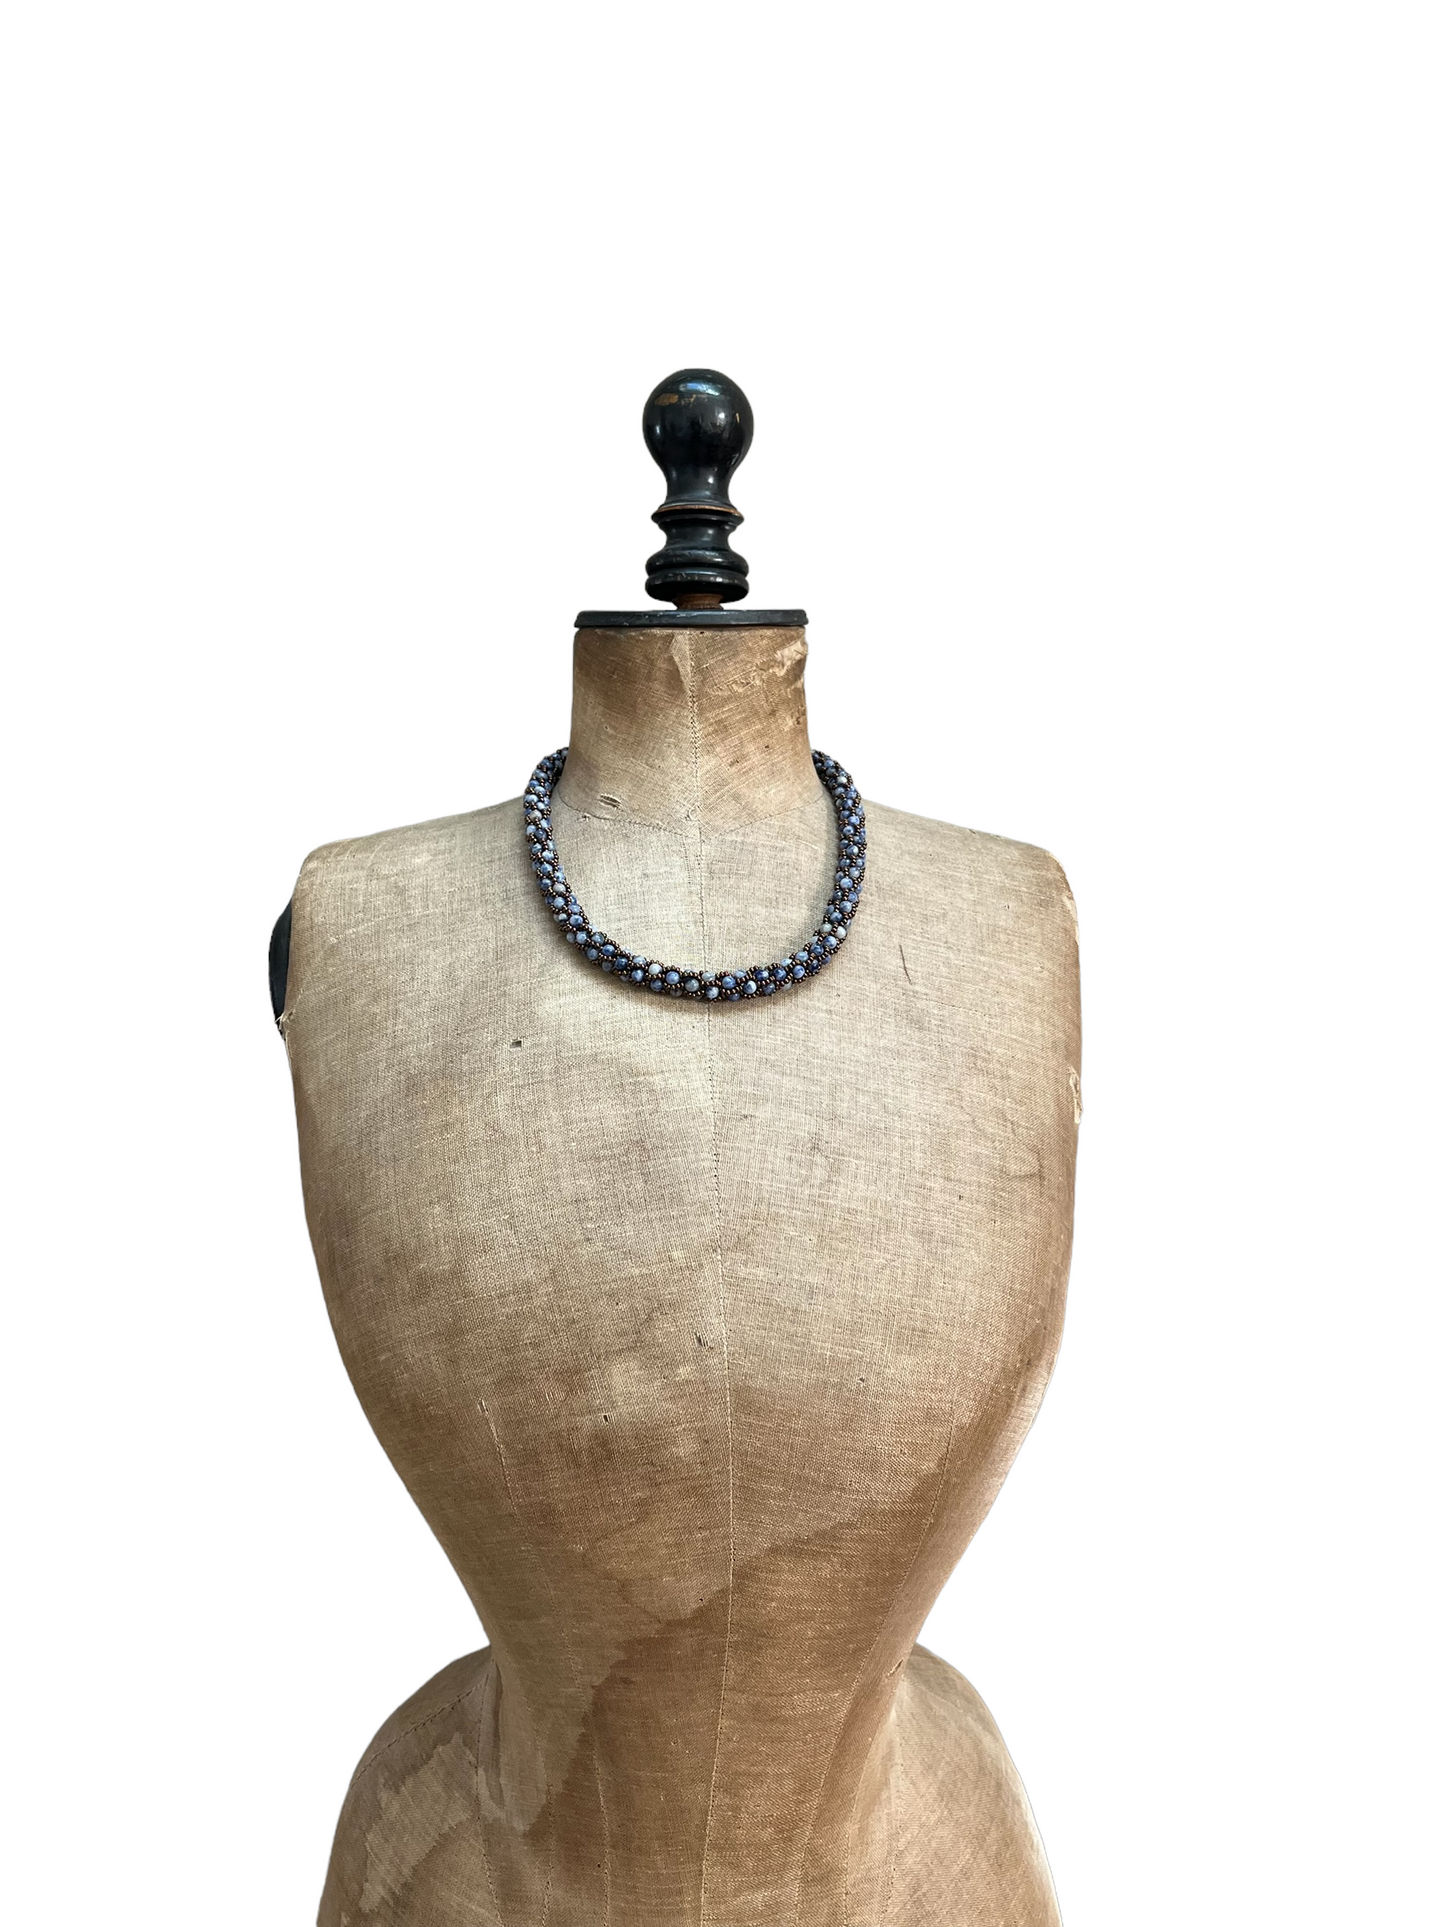 Collier spirale au crochet en perles Miyuki et sodalite, 50 cm